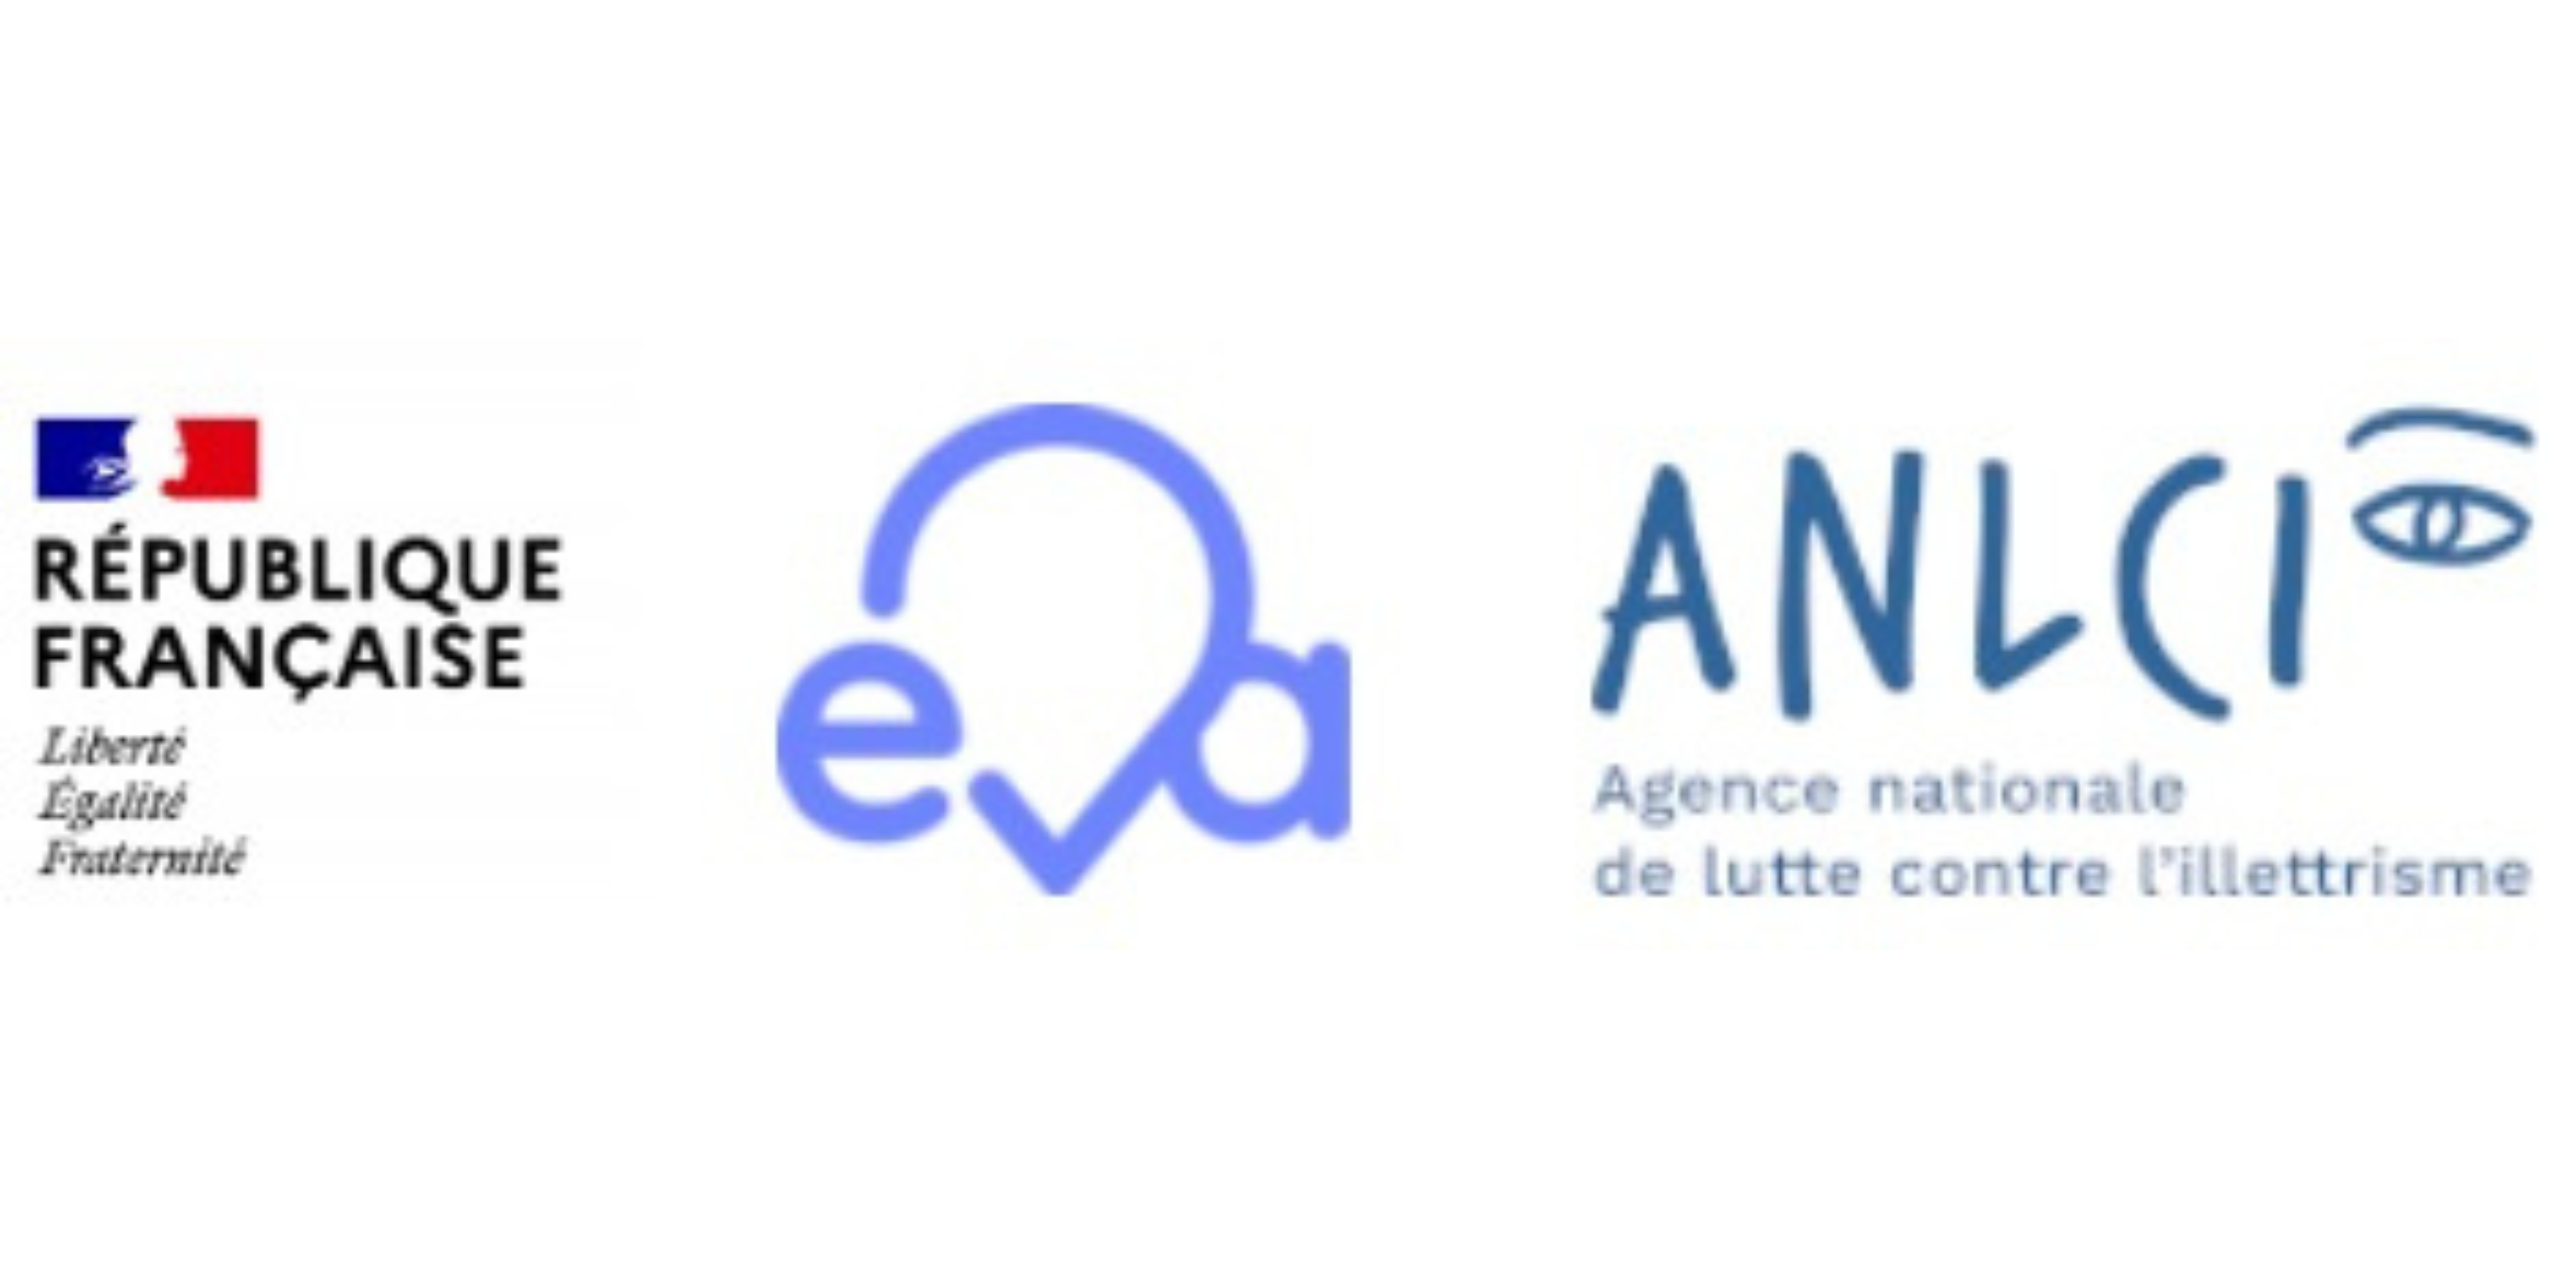 Logo EVA